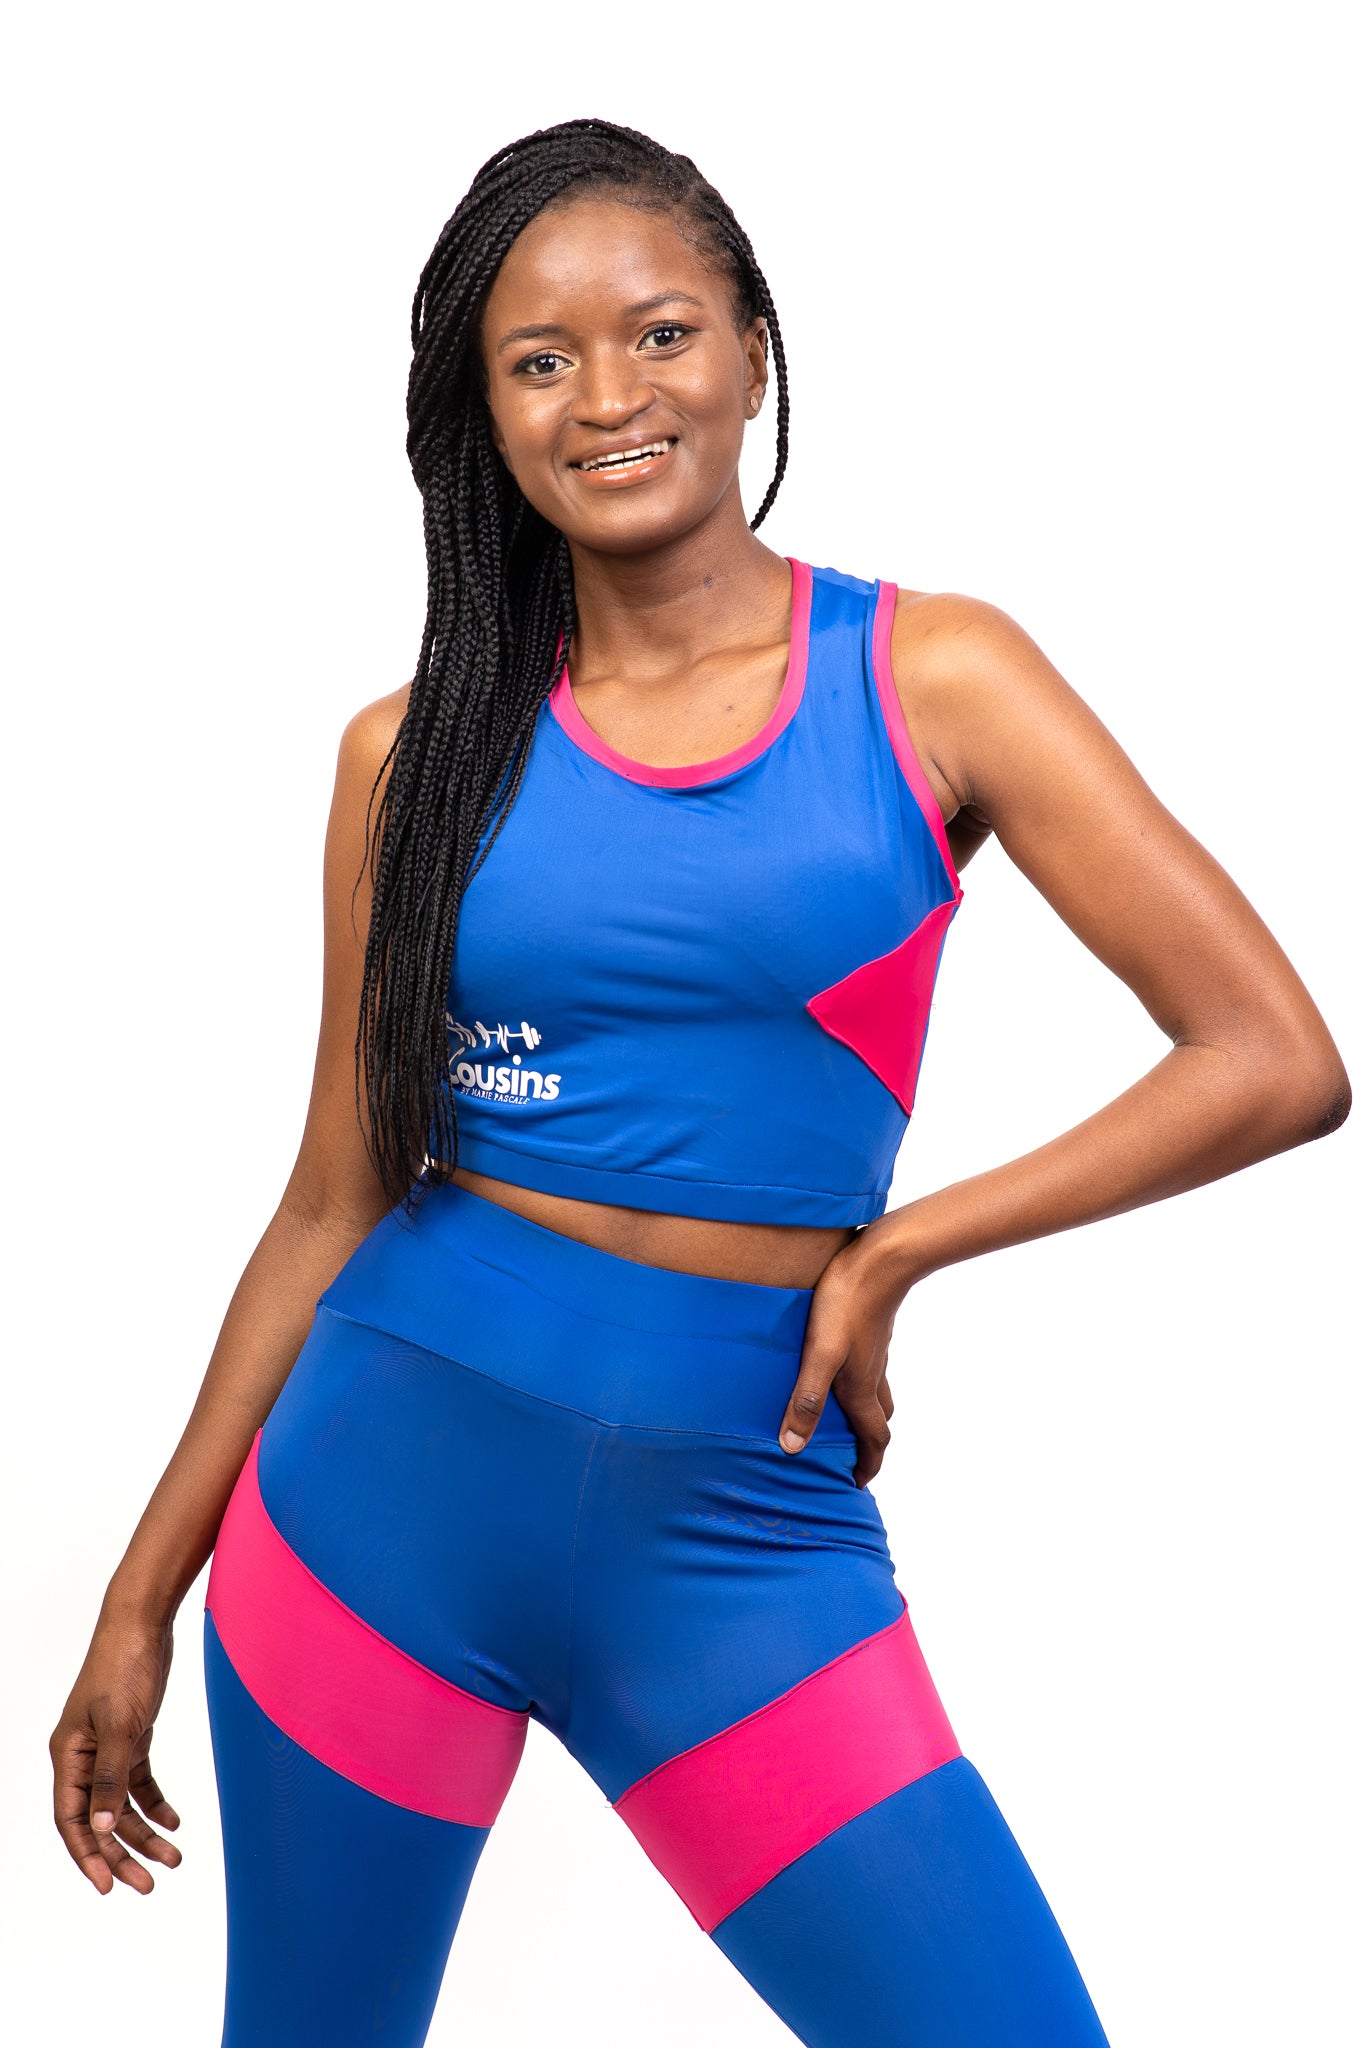 Imani Female Fitness Wear Set - Blue